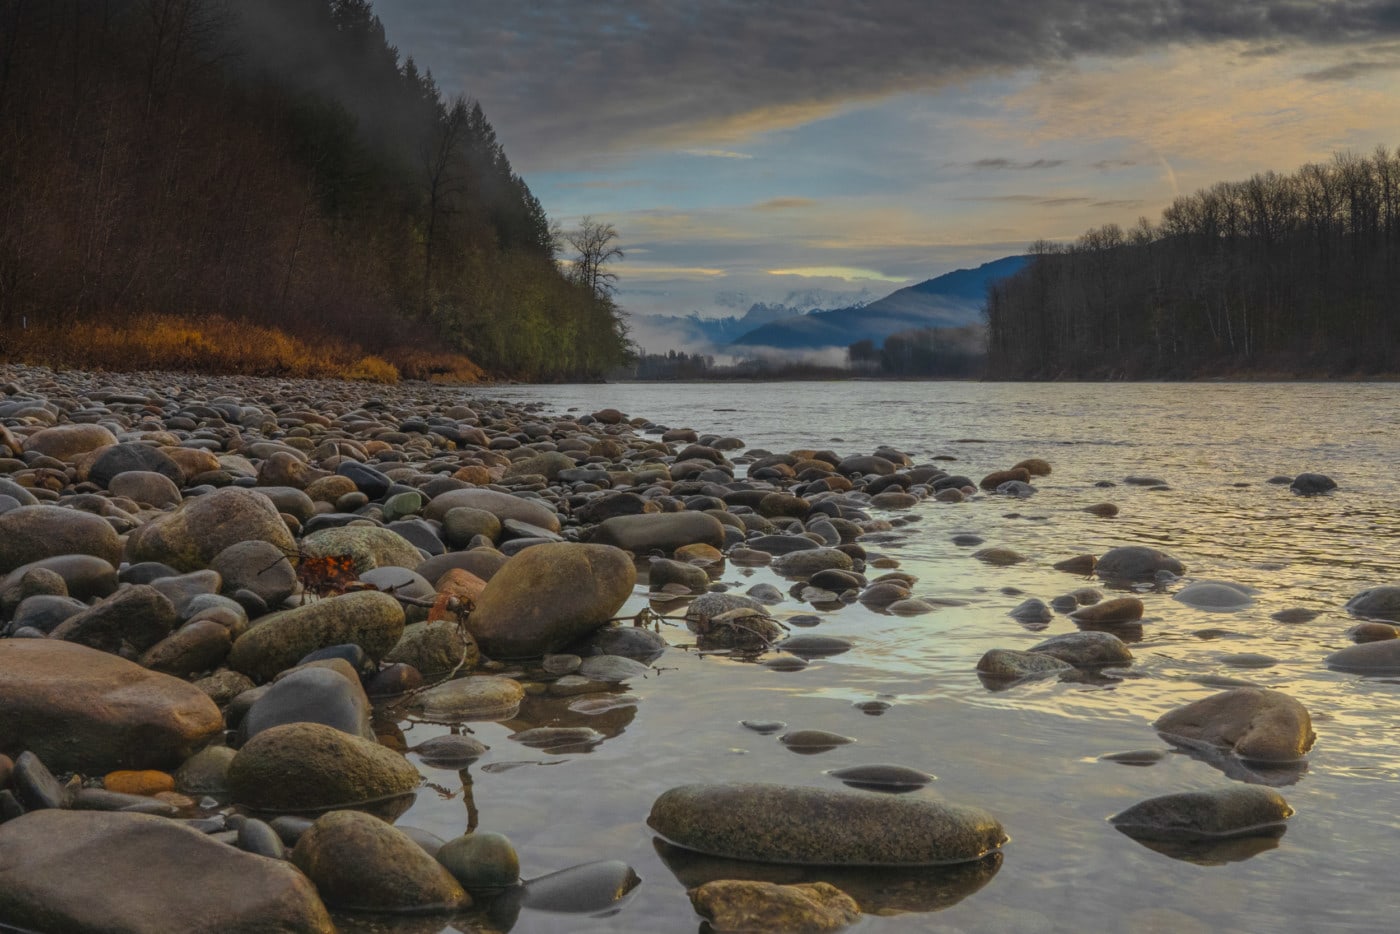 The Skagit River. Photo: Fernando Lessa / The Narwhal